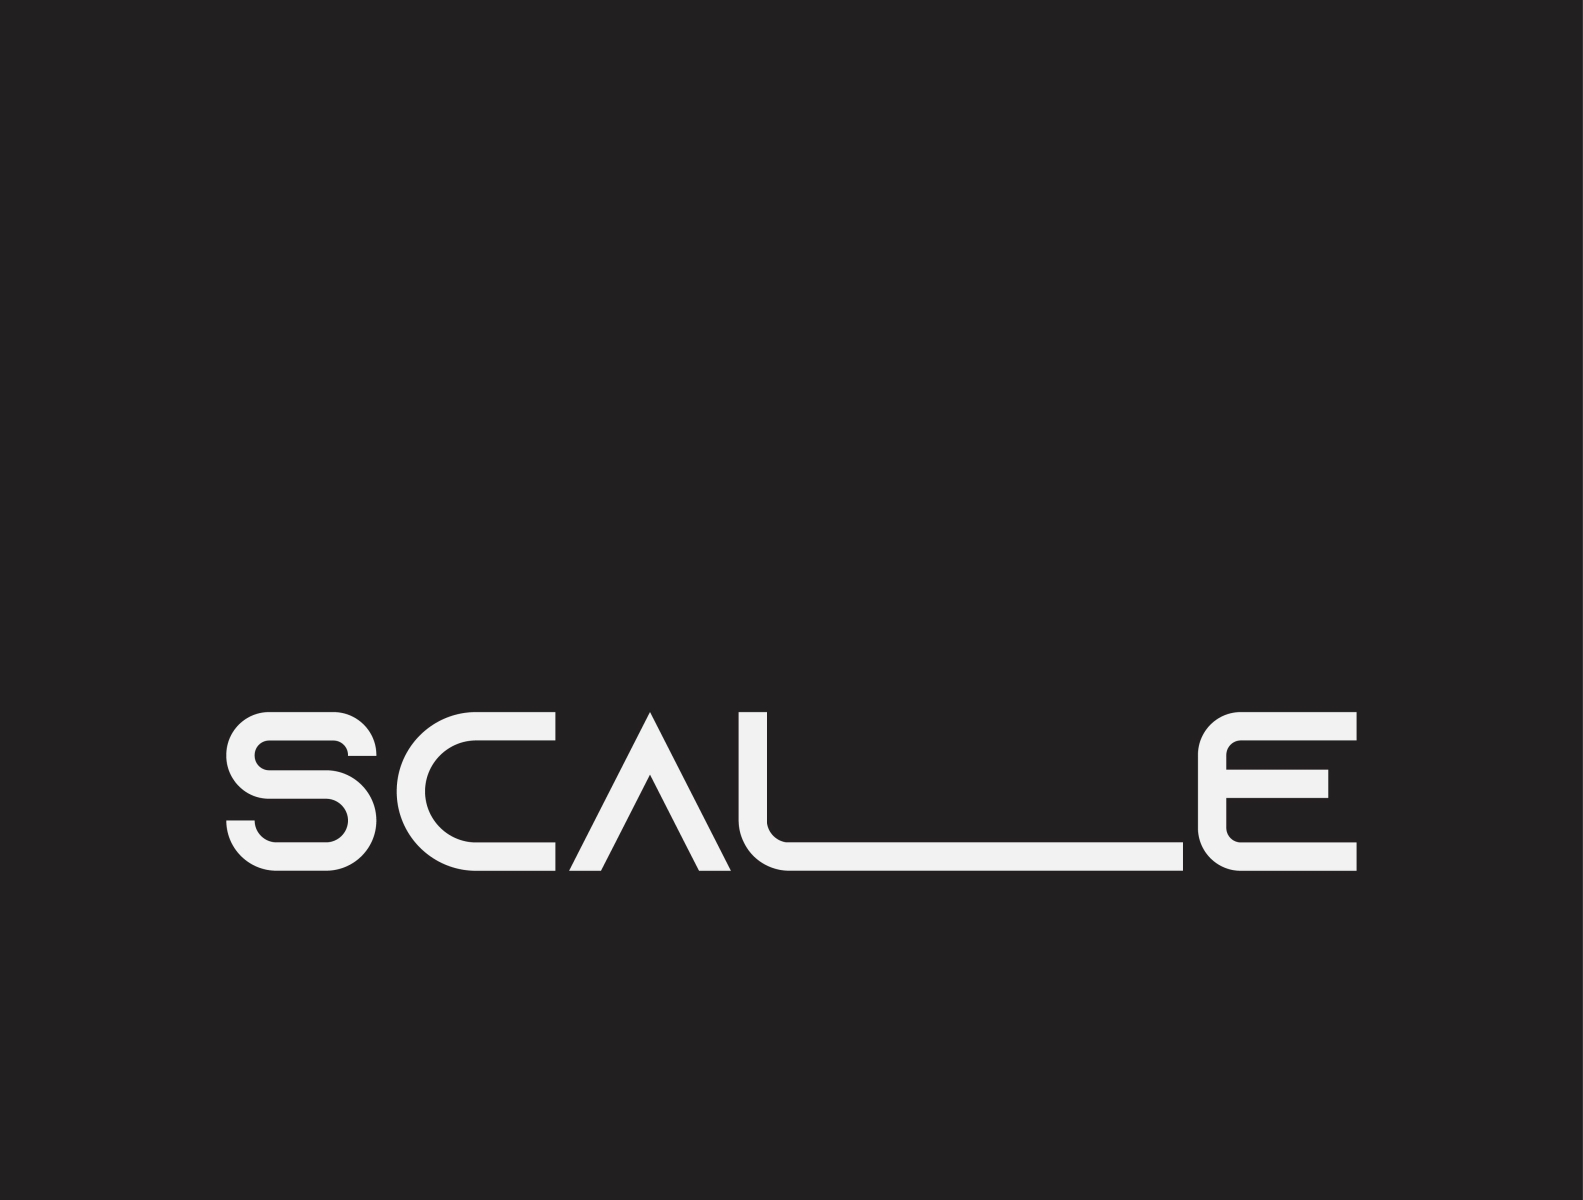 Scale logo by Rony Pa - Logo Designer 🔵 on Dribbble